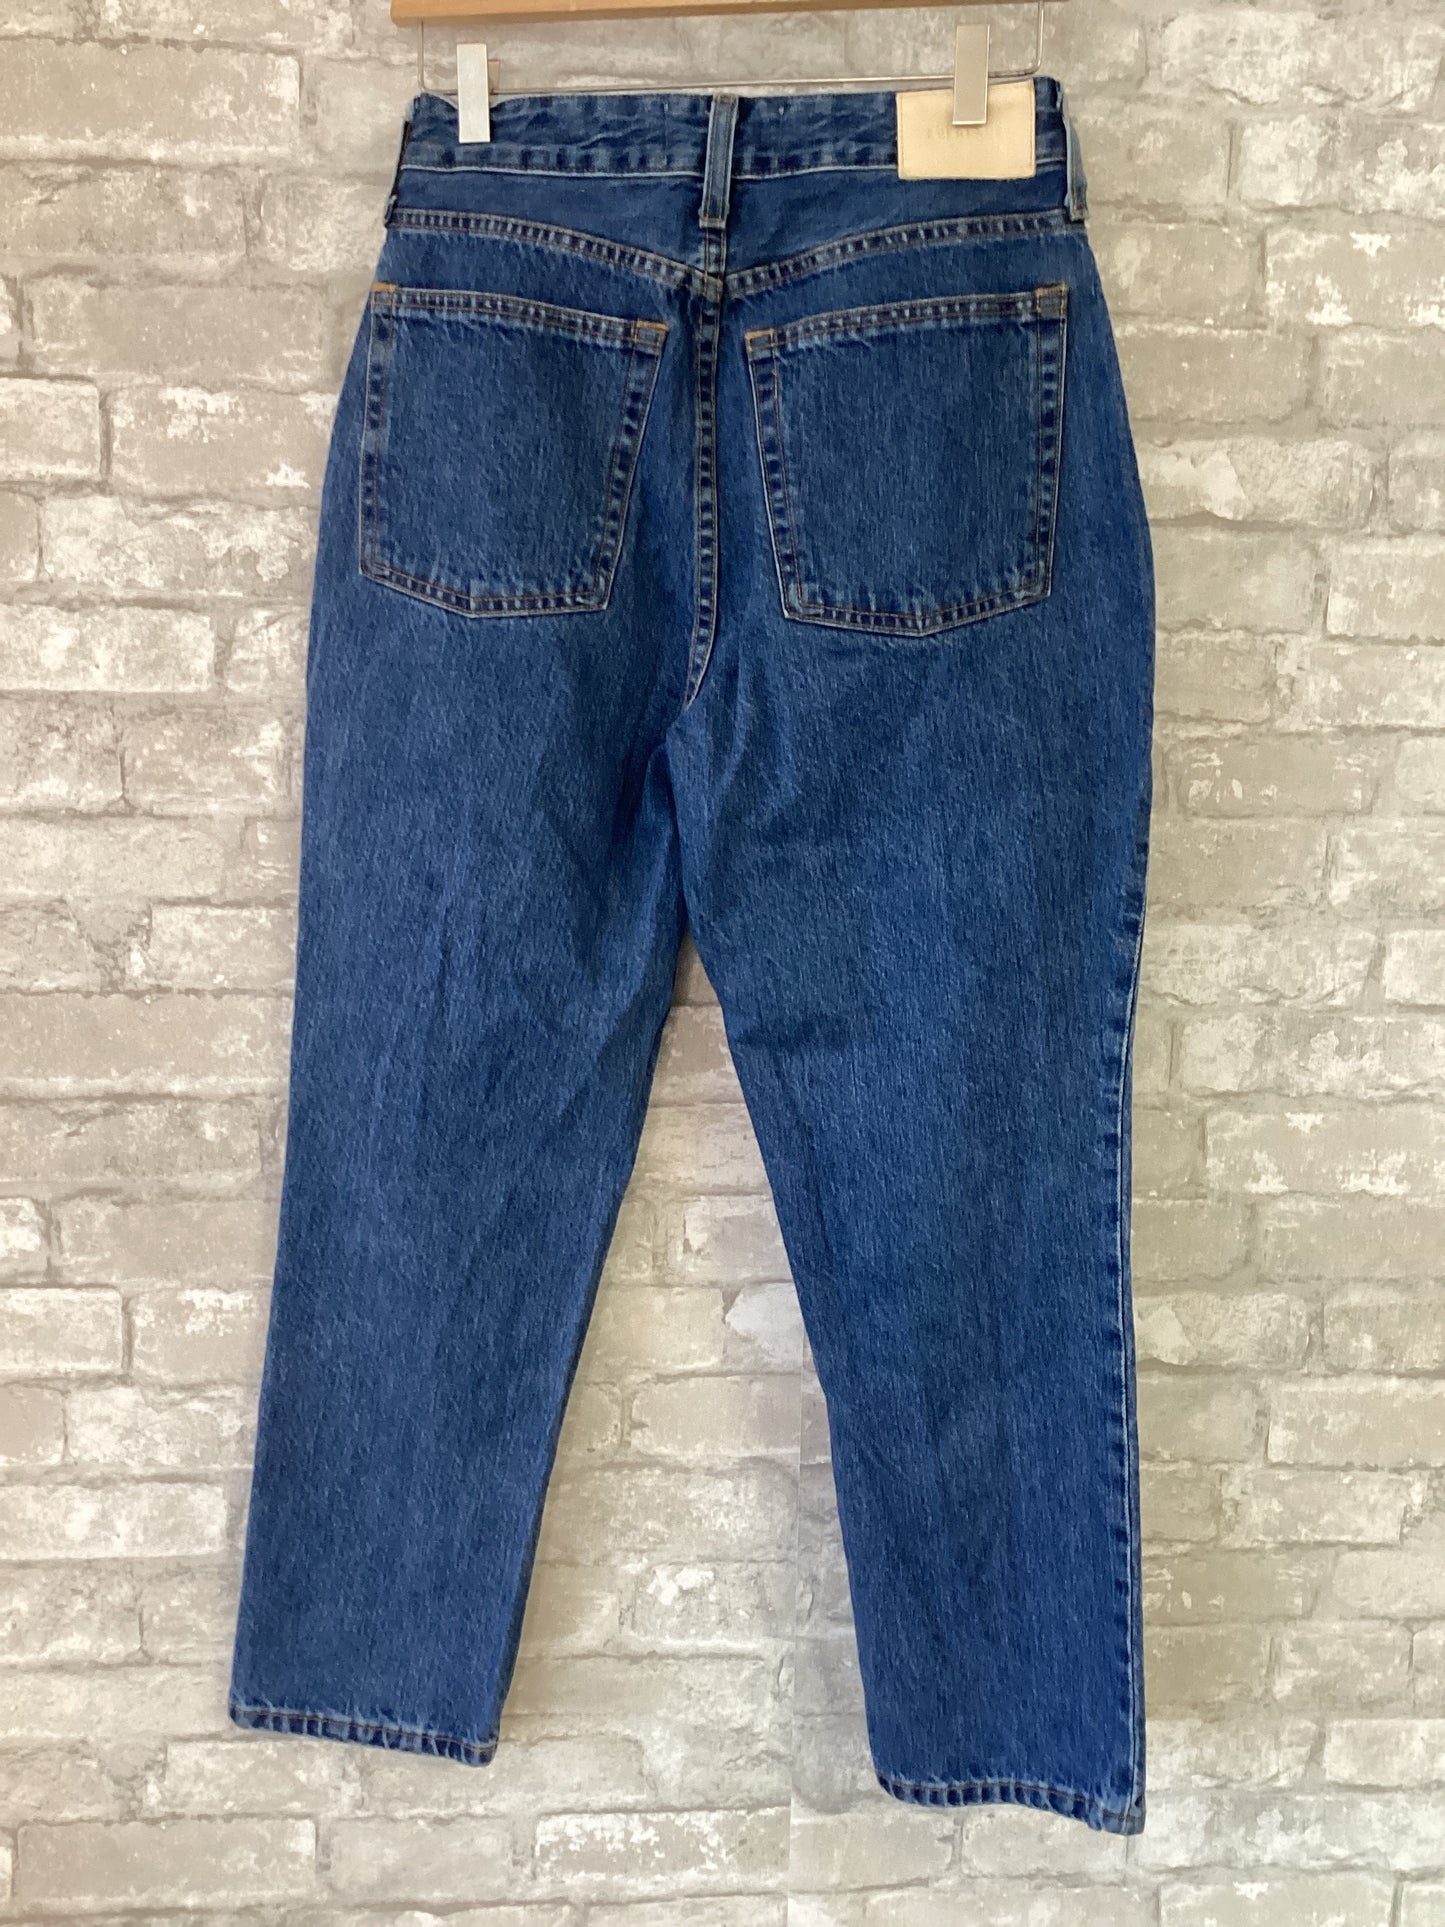 Everlane Size XS/2 Medium Wash Jeans